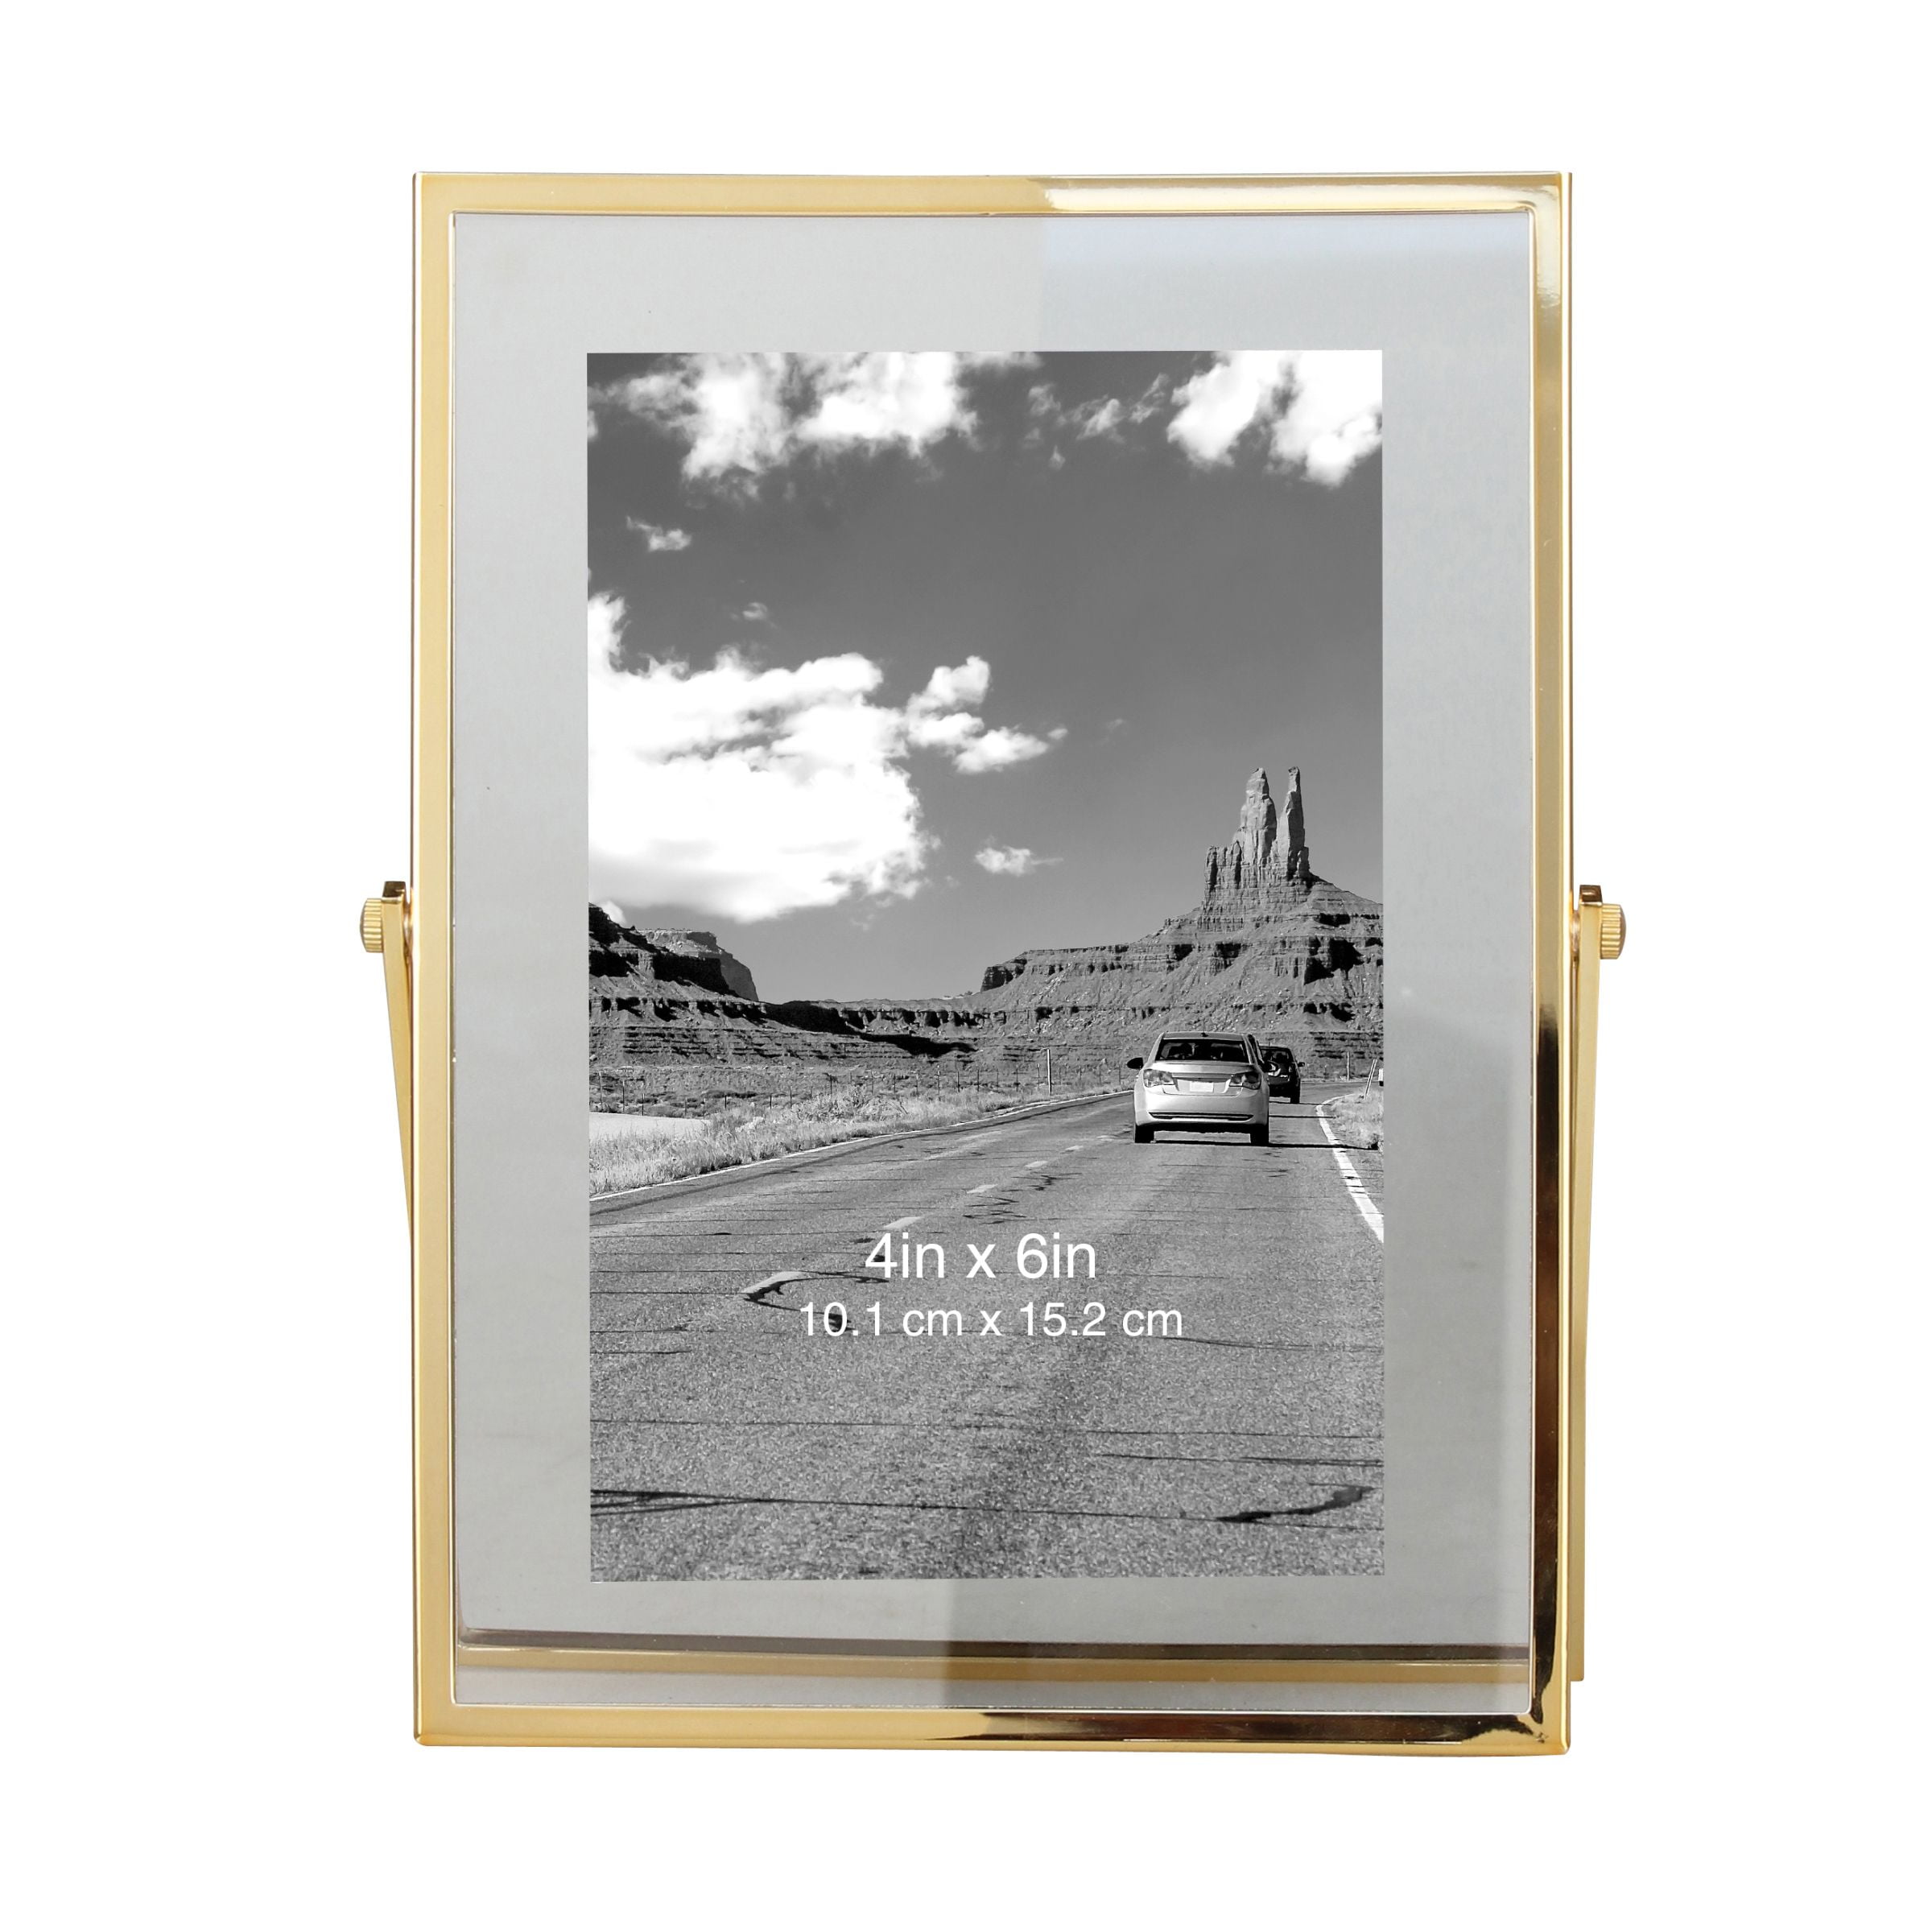 Retro Glass Floating Wall Display Metal Landscape Holder Photo Frame Gold 